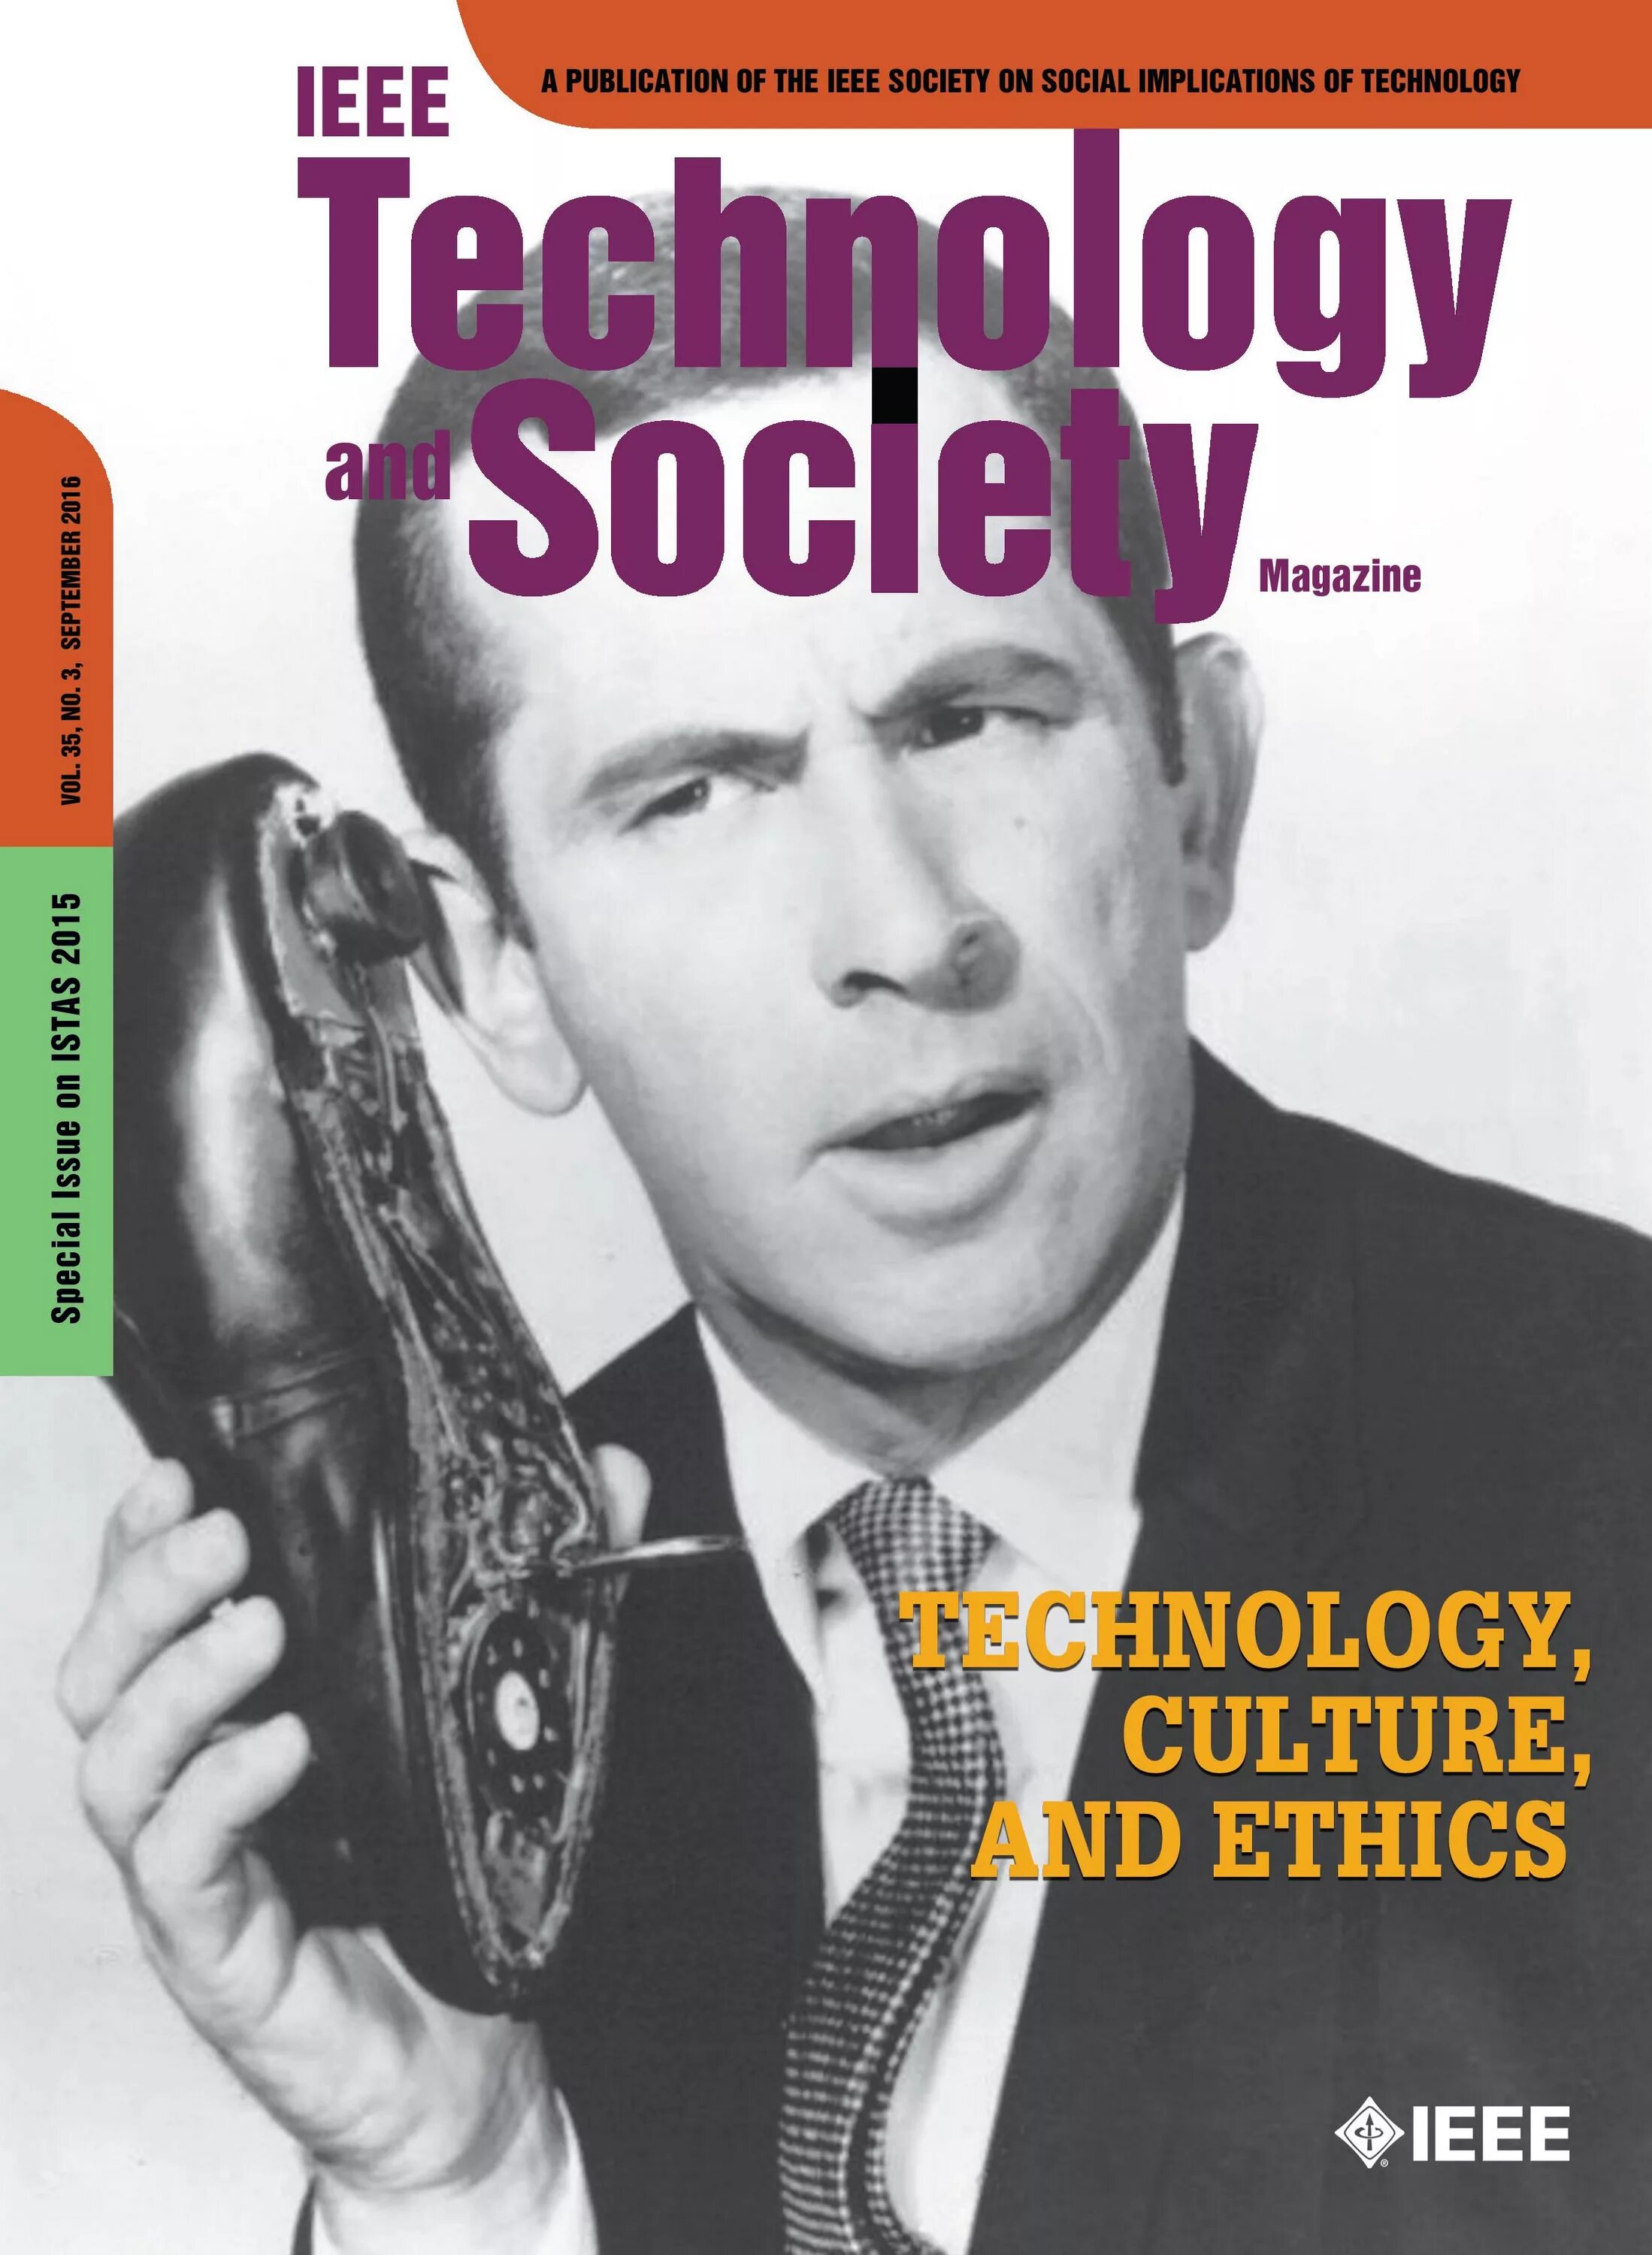 Technology in Society журнал. Журнал технологии. Cover Magazine Technology. Журнал Технолоджис. Societies журнал